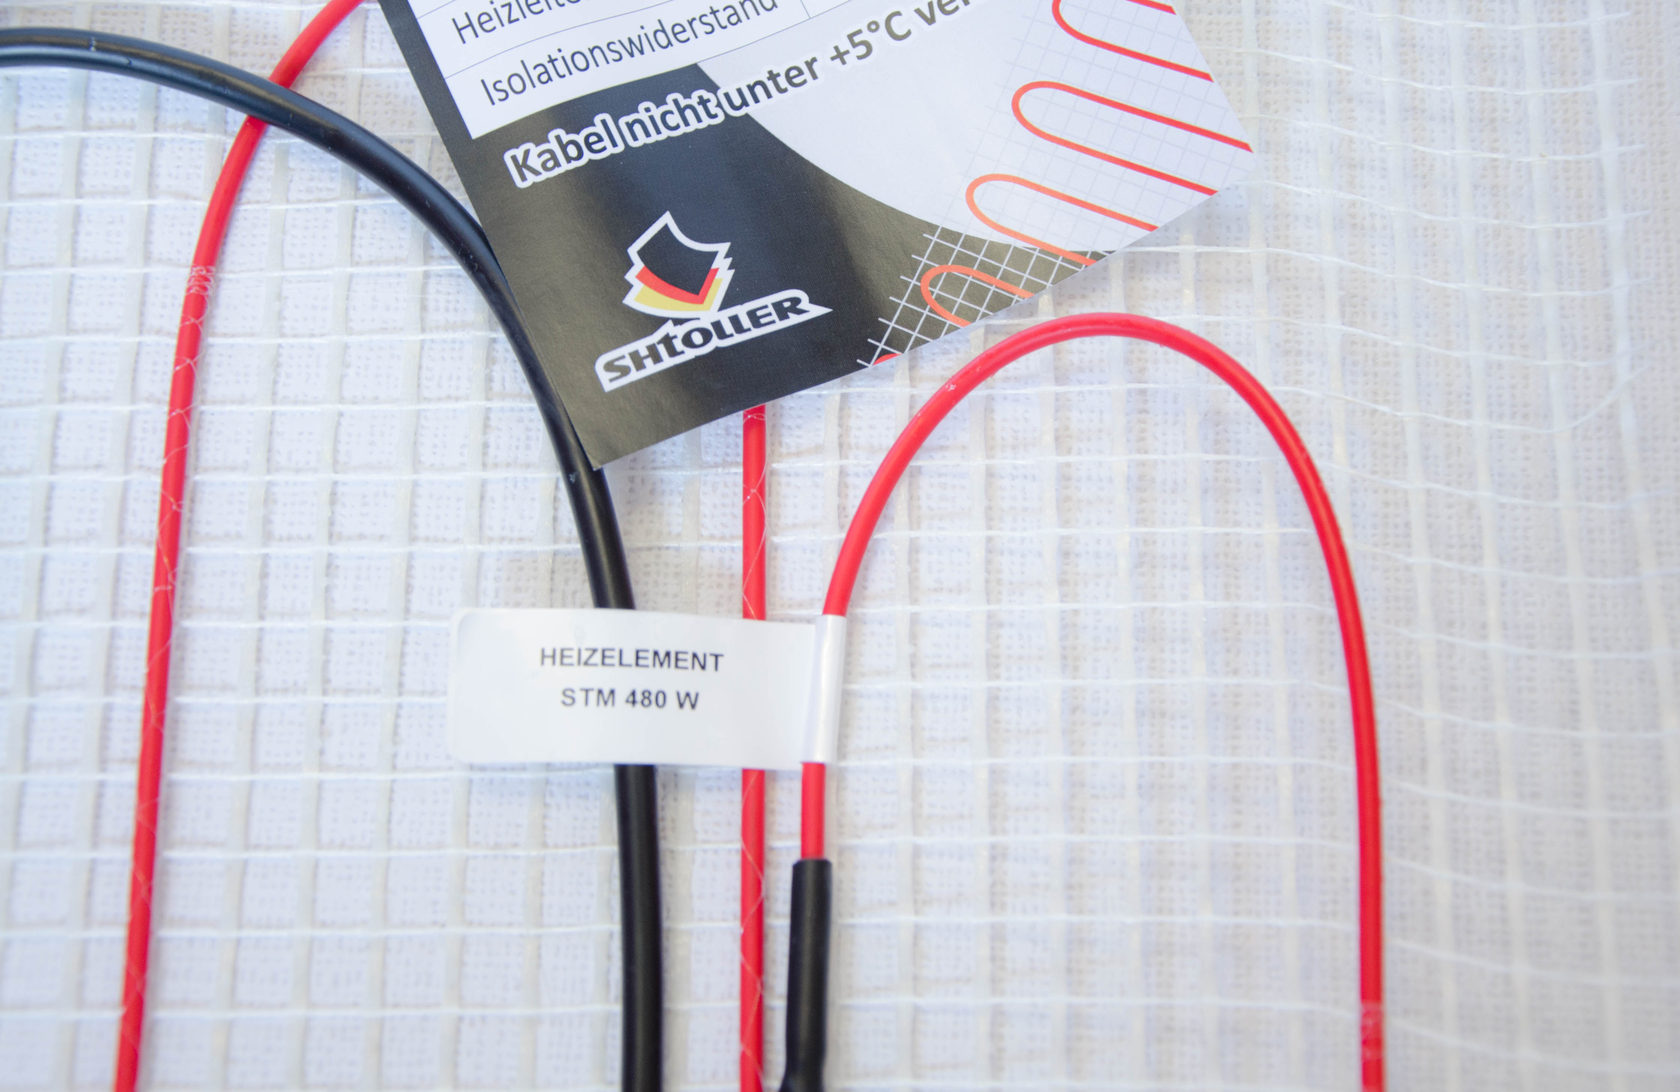 Электрический теплый пол Shtoller STM 1120W цена 0 грн - фотография 2